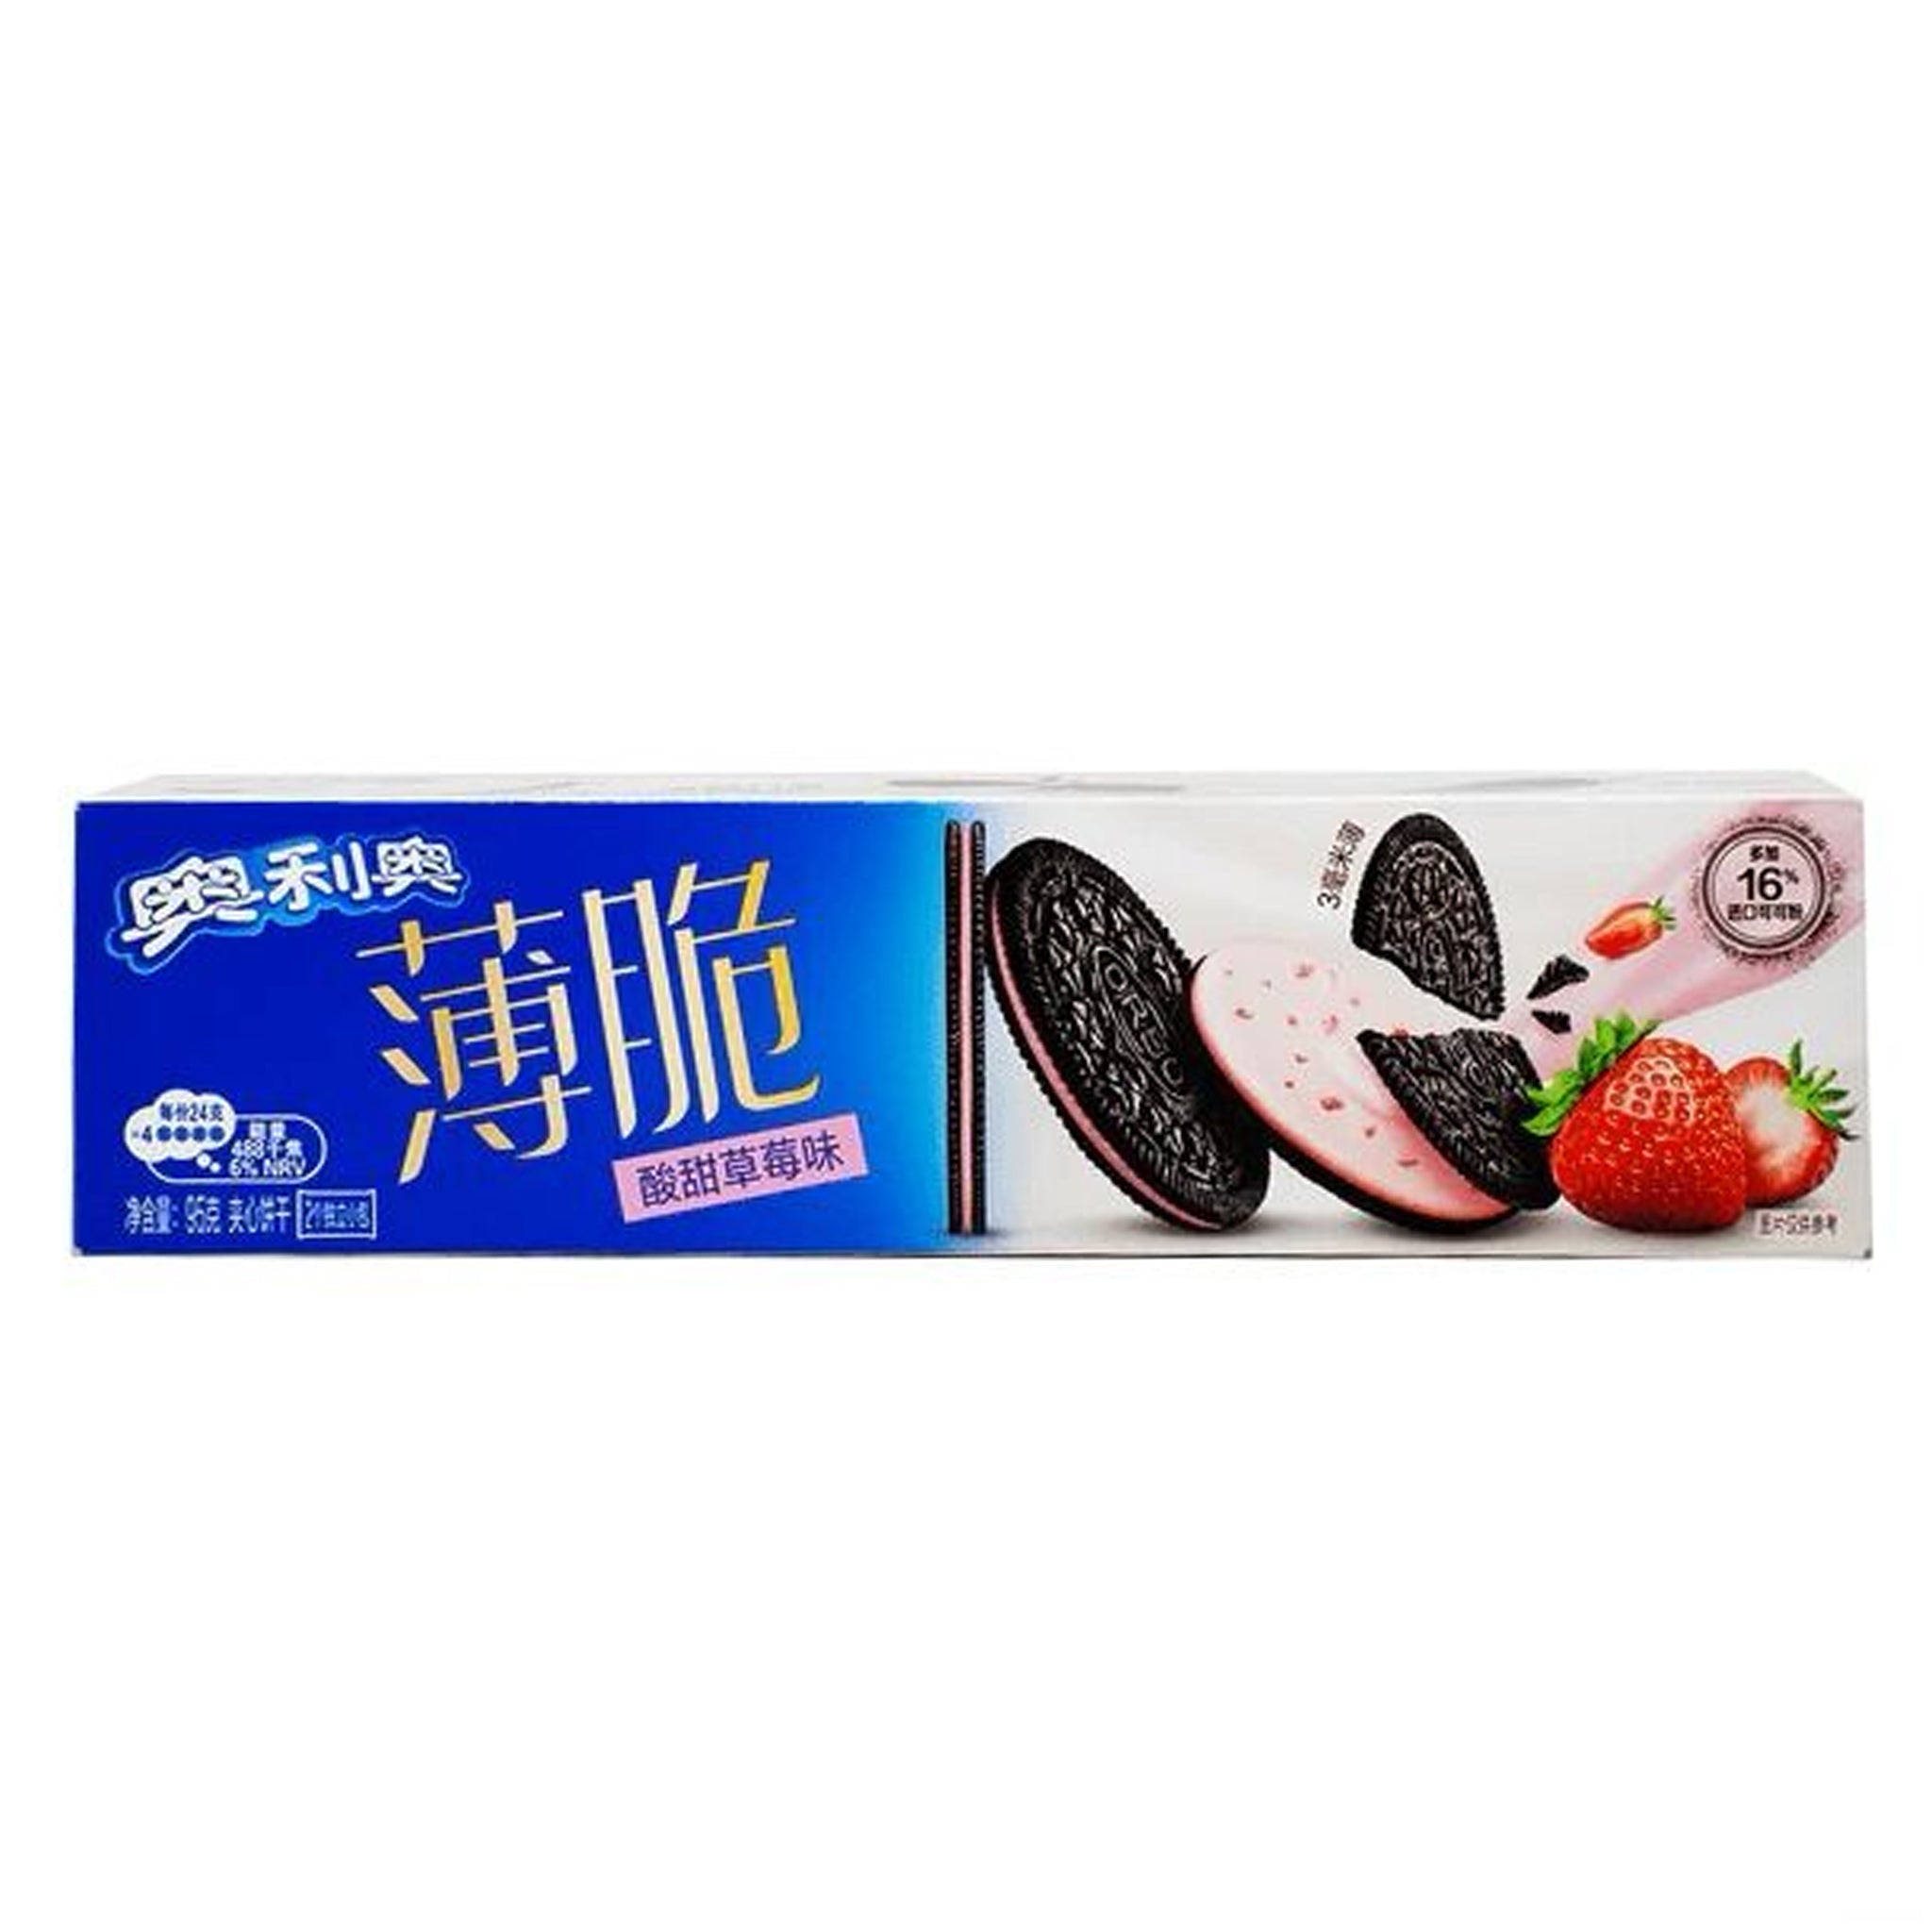 Oreo Strawberry אוראו עם קרם תות